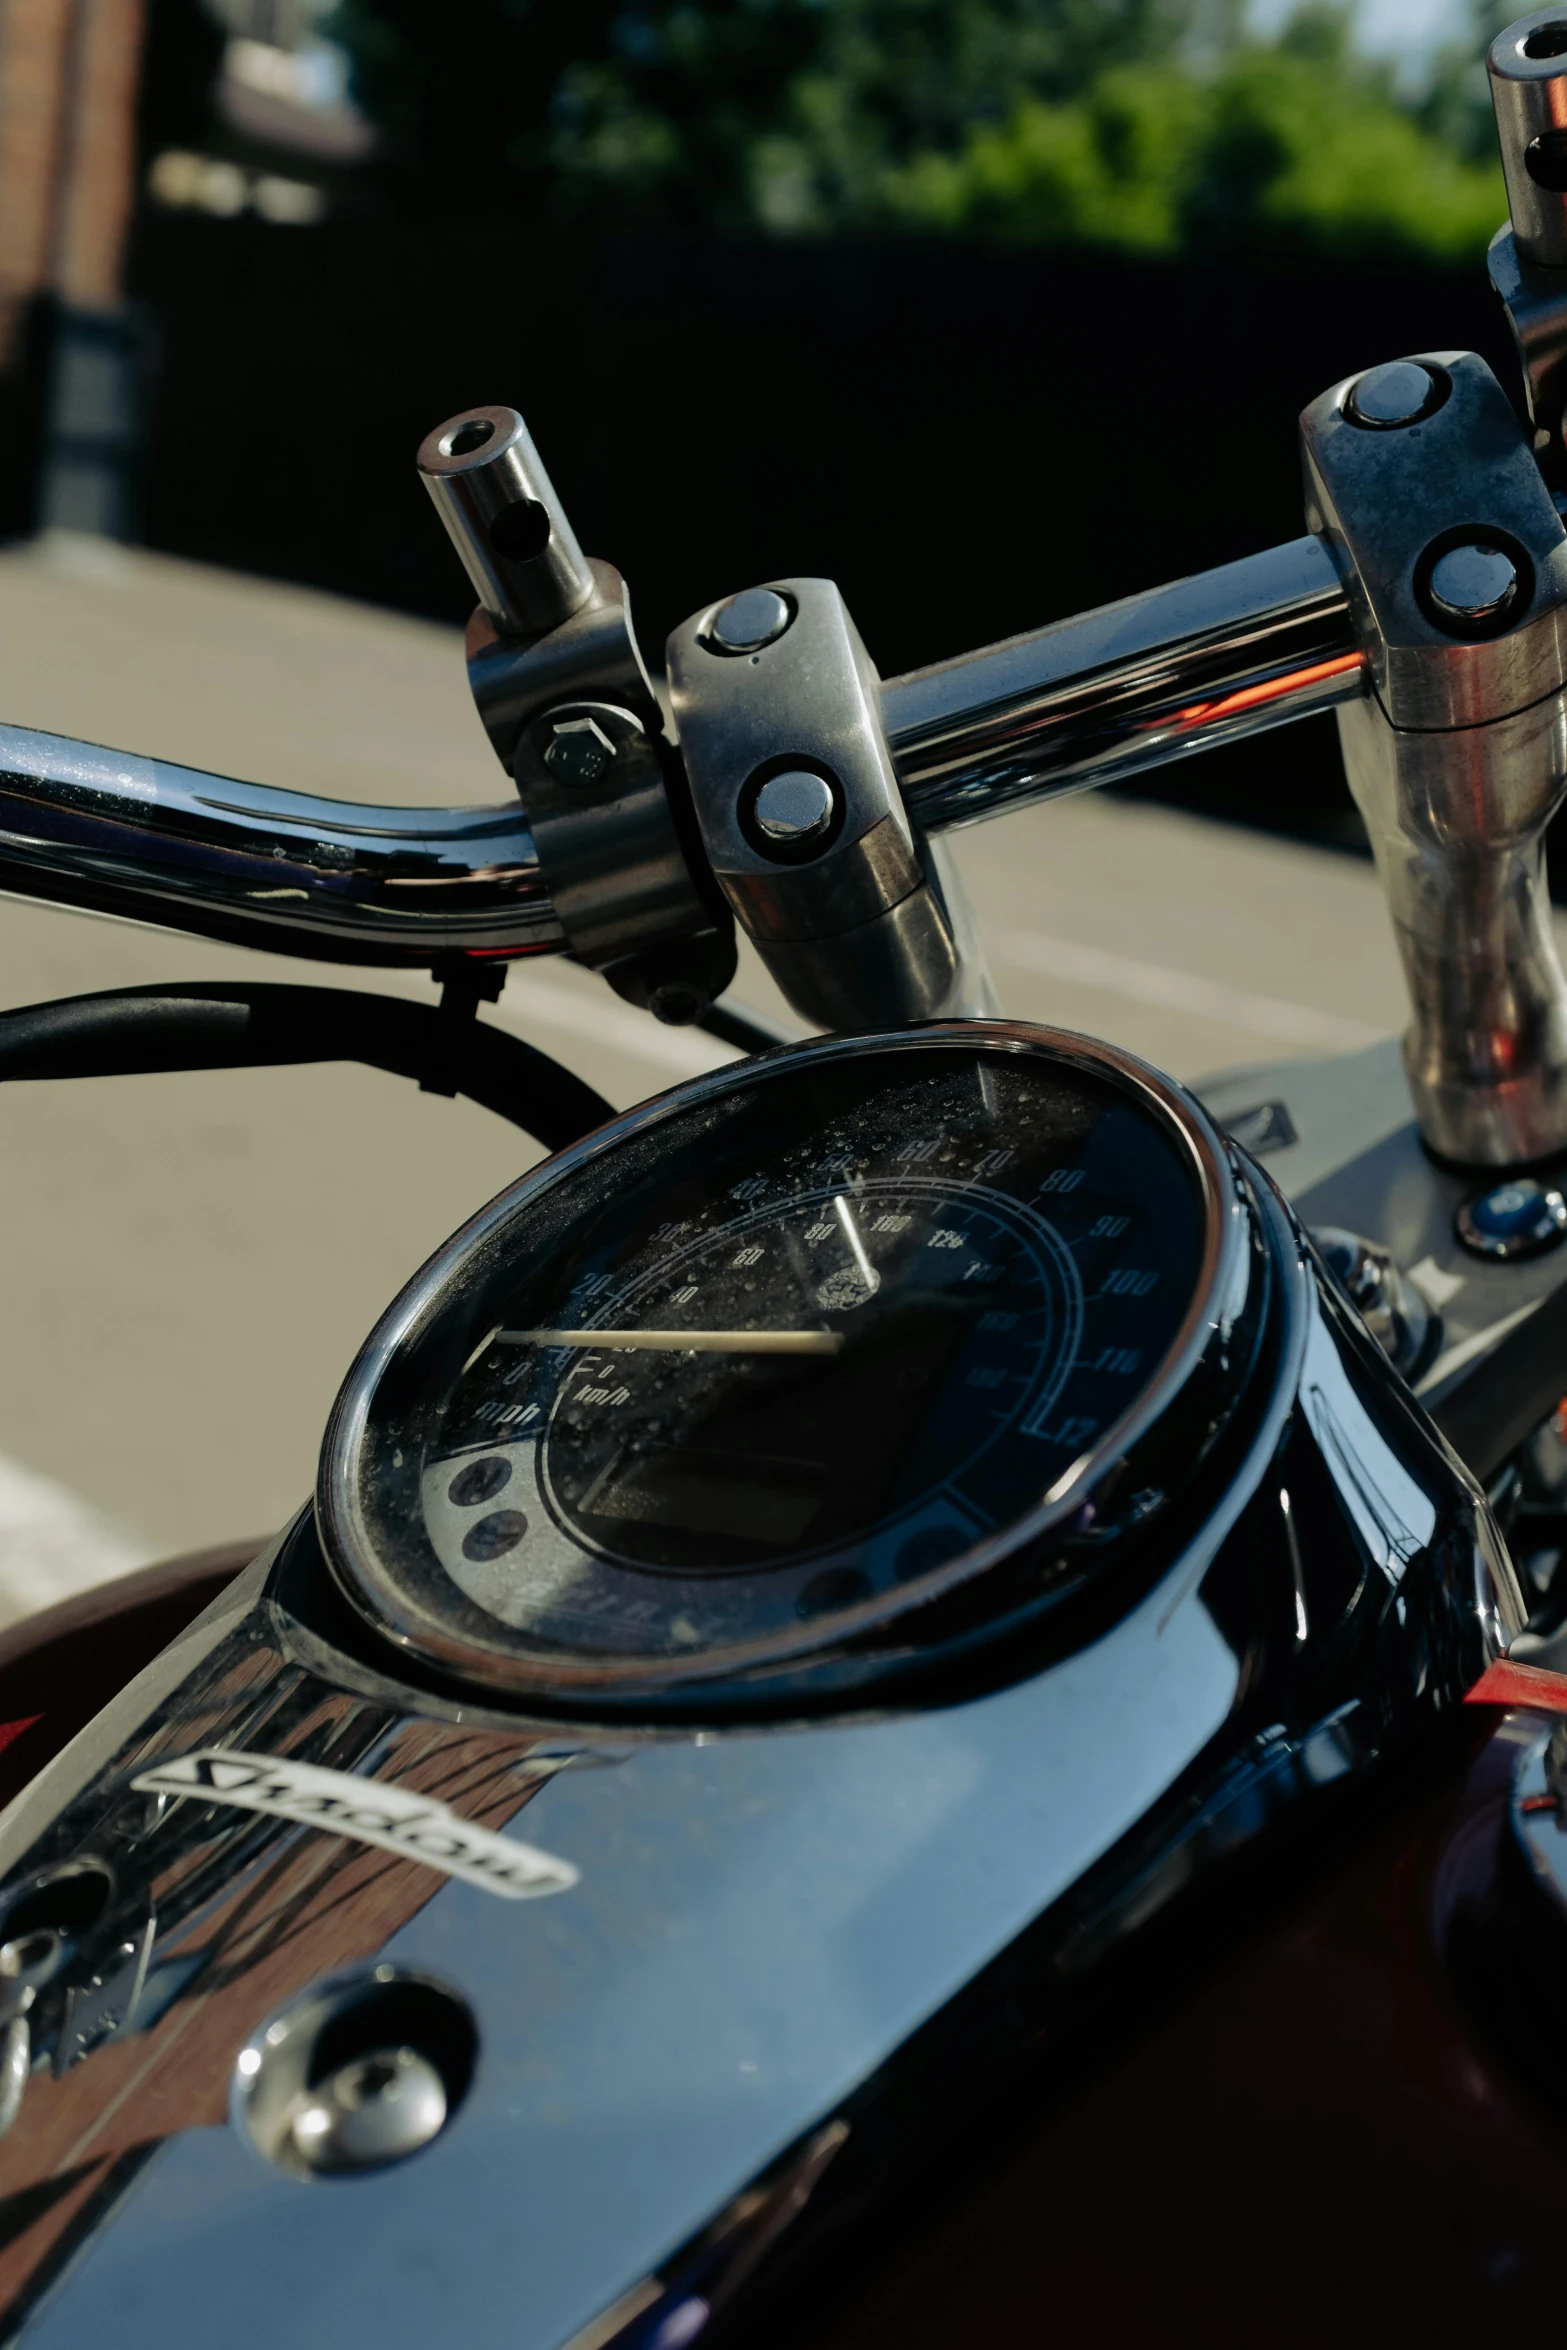 the handlebars and gauges on a motor bike